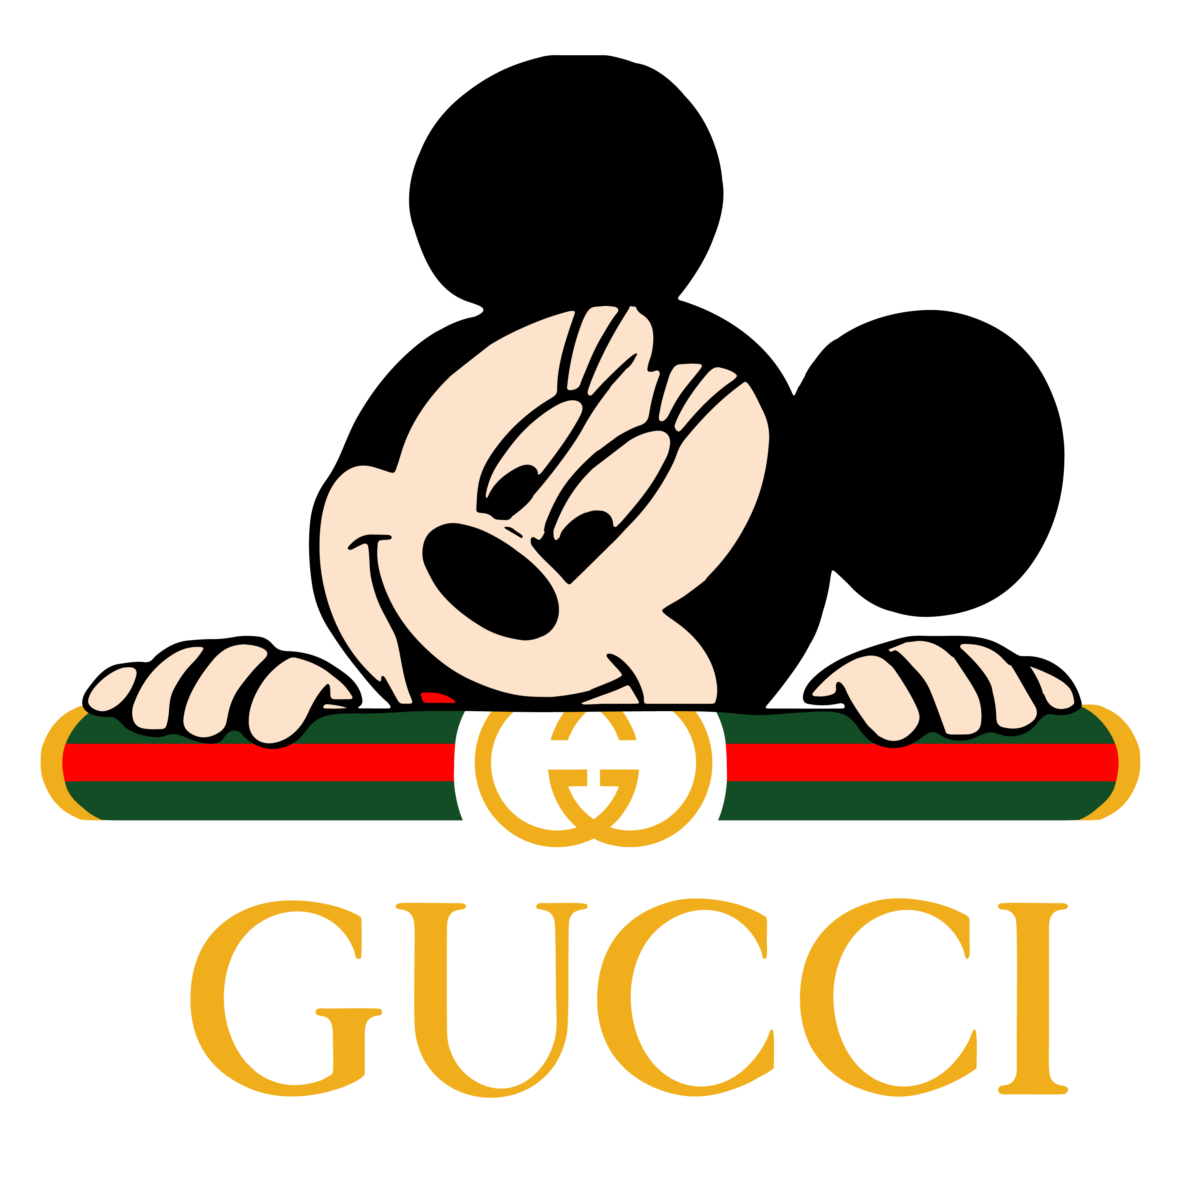 Gucci Mickey And Minnie SVG